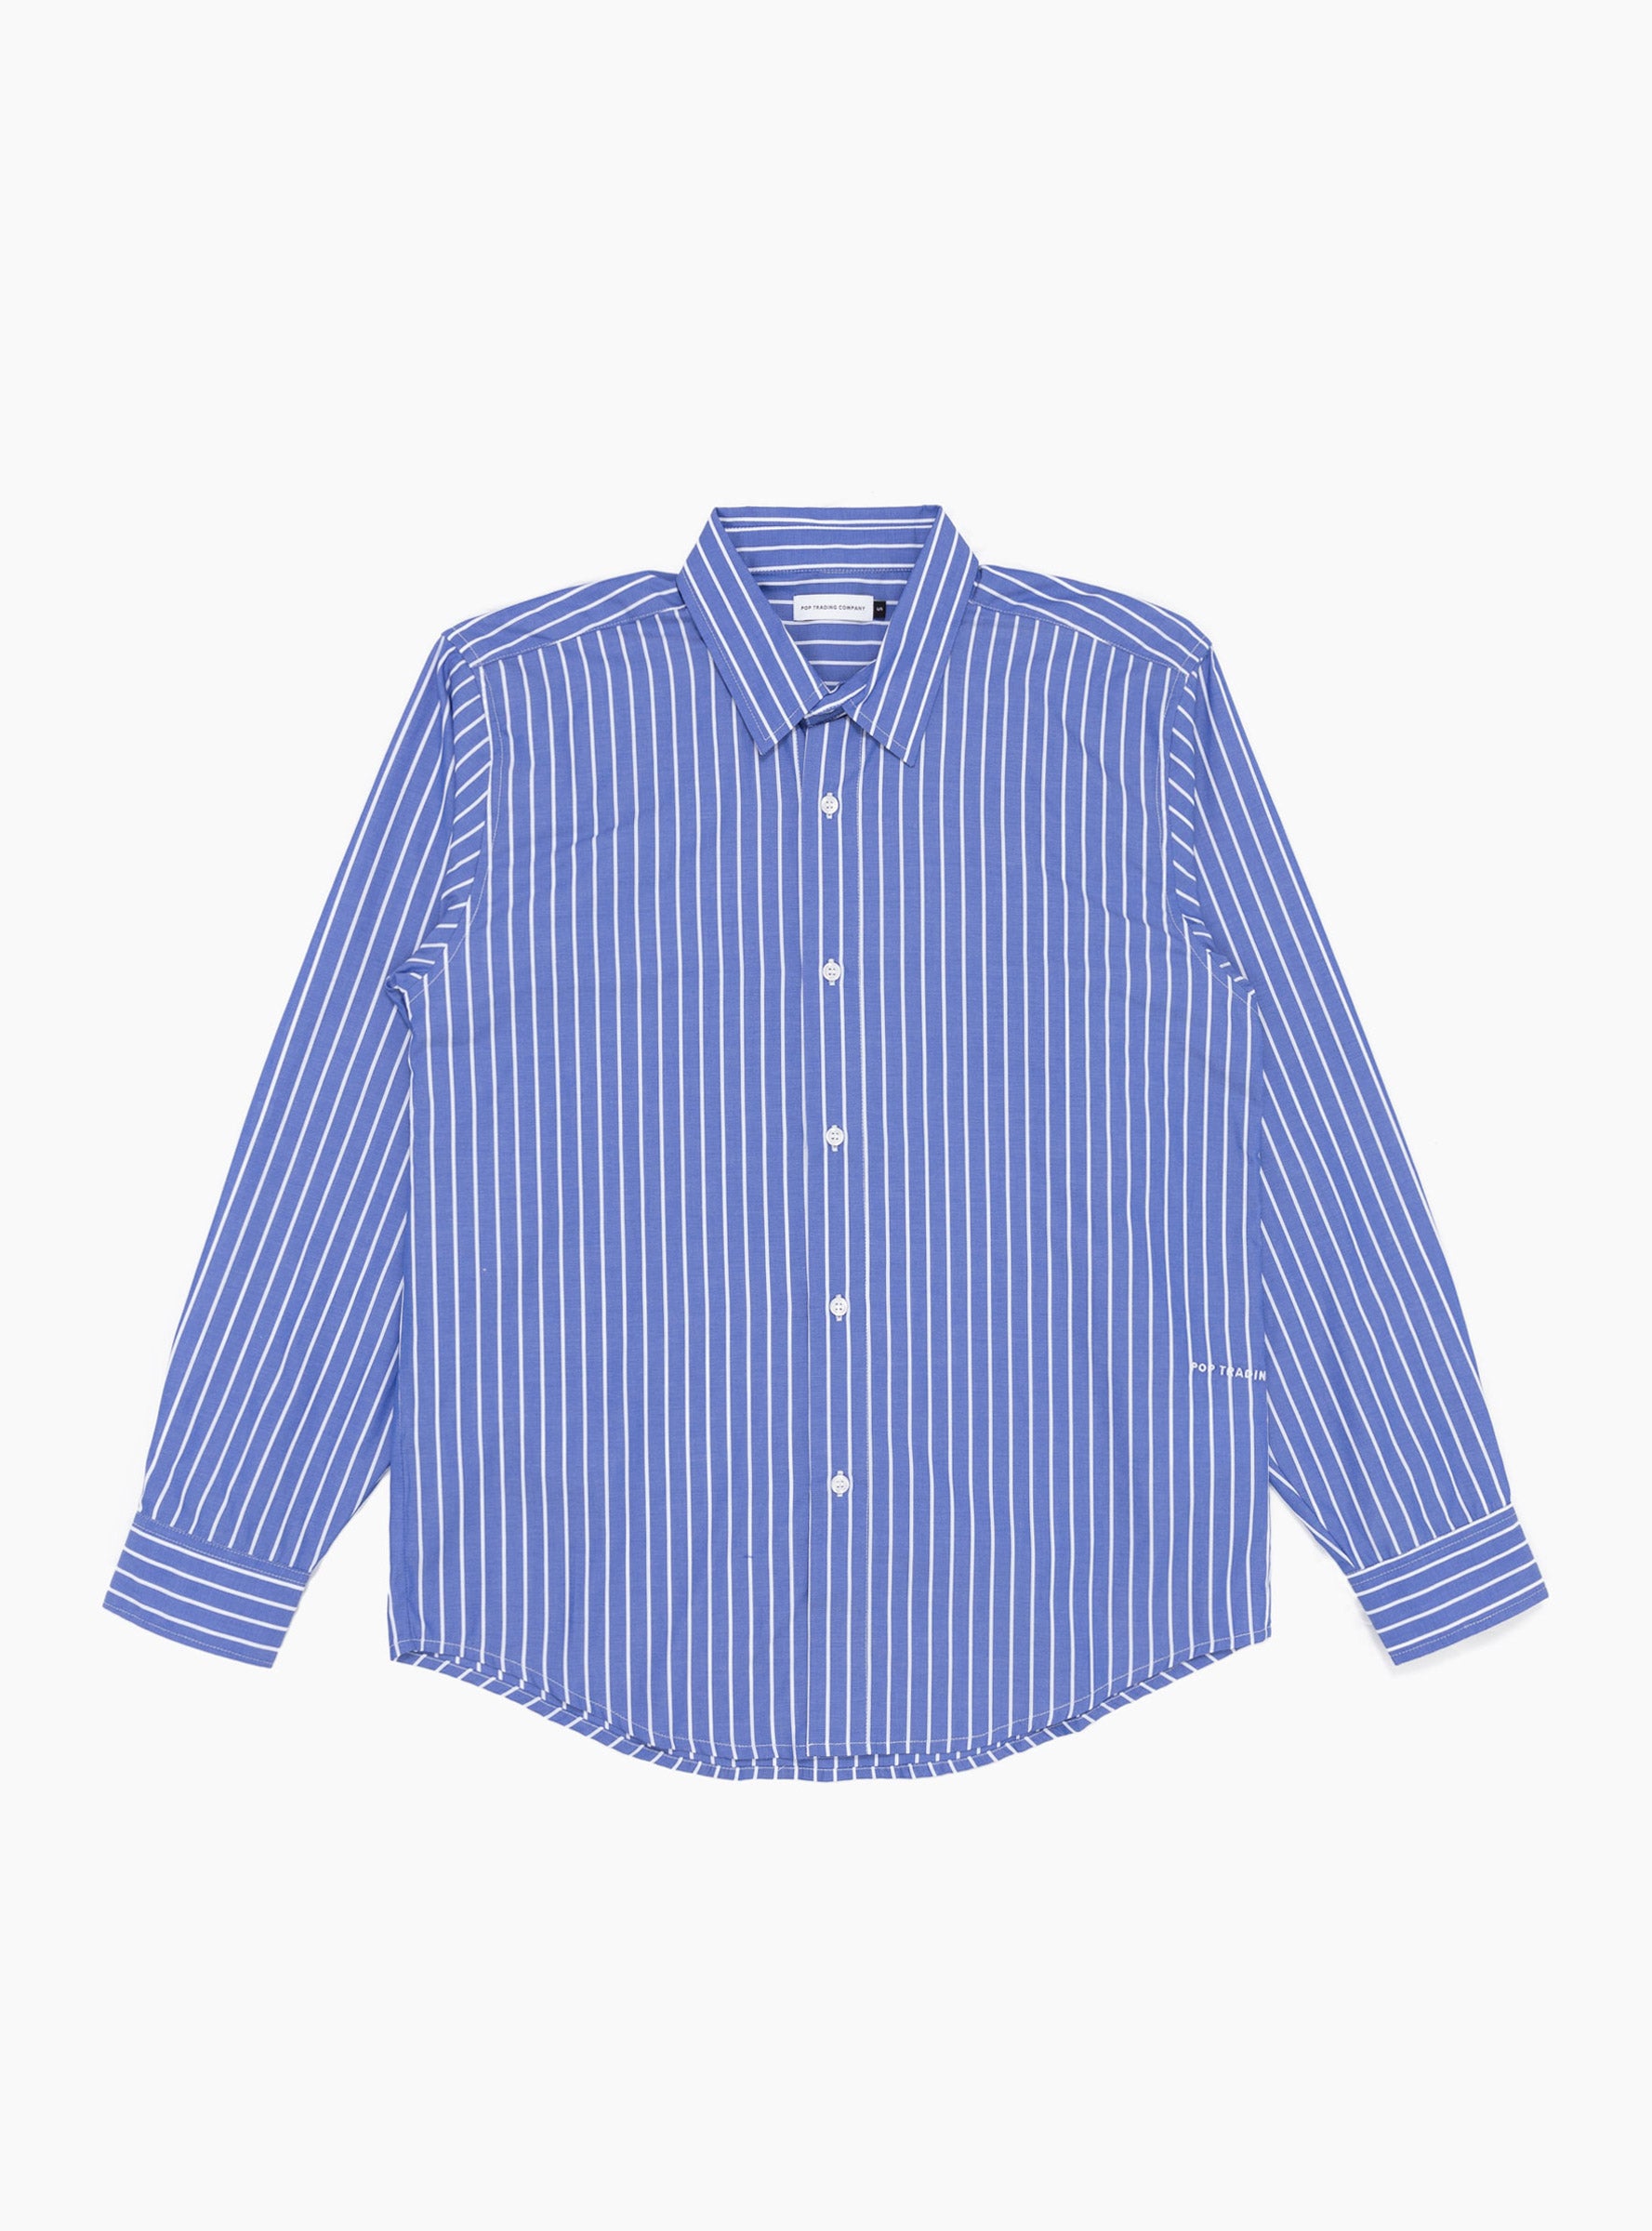 Pop Trading Company Pop Trading Company Logo Striped Shirt Blue - Size: Small